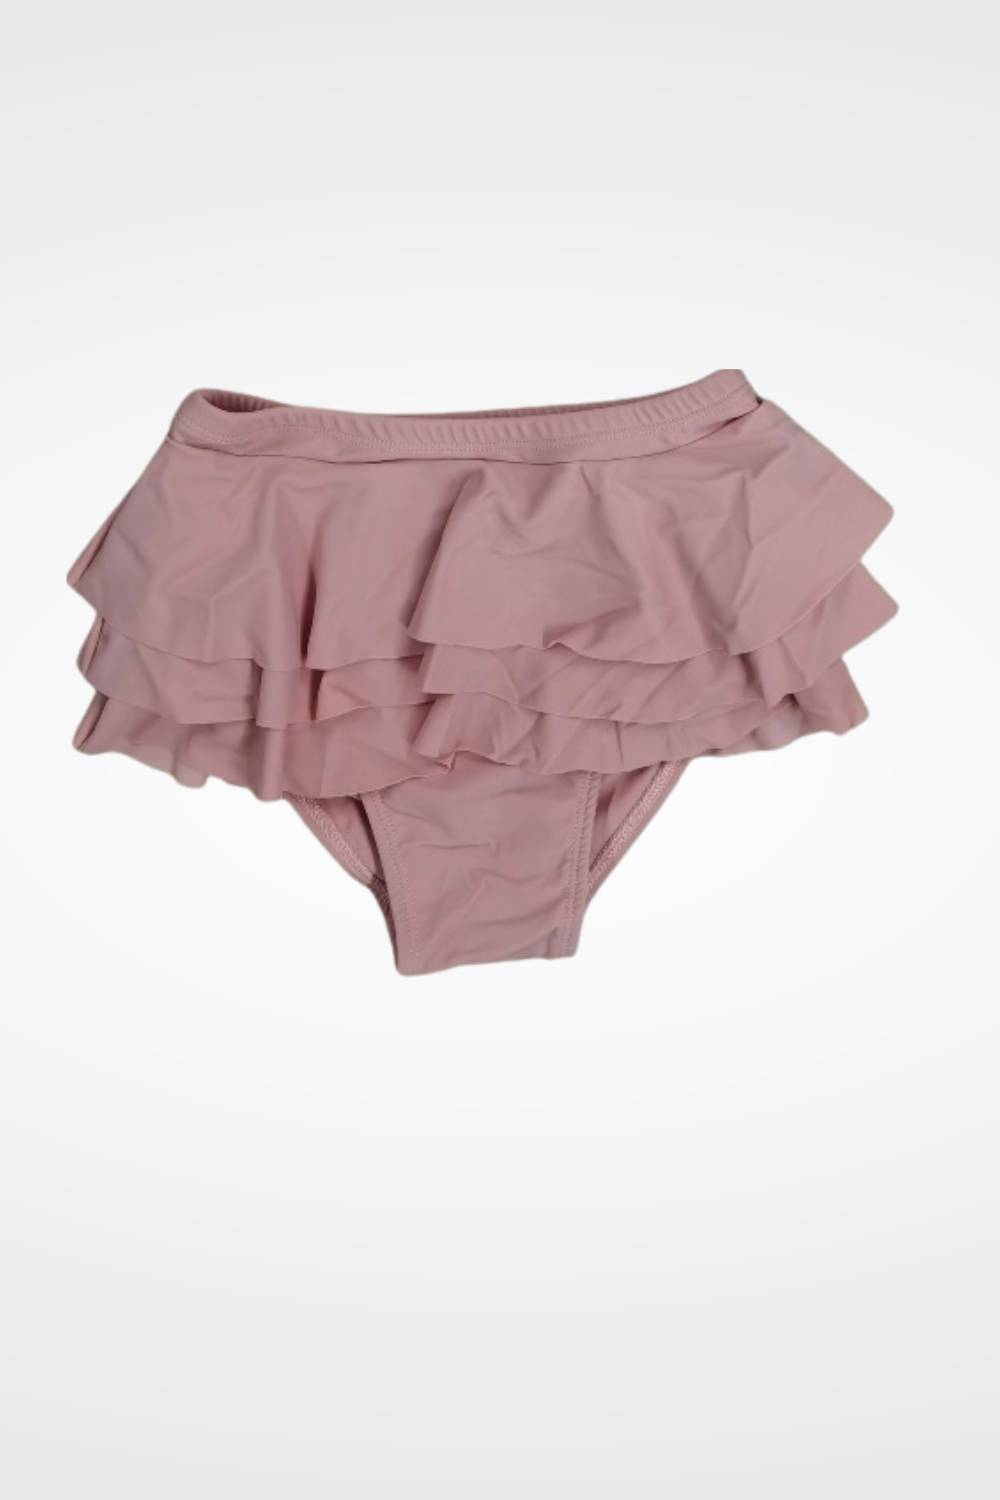 Pink bather bottom bloomer swim pants